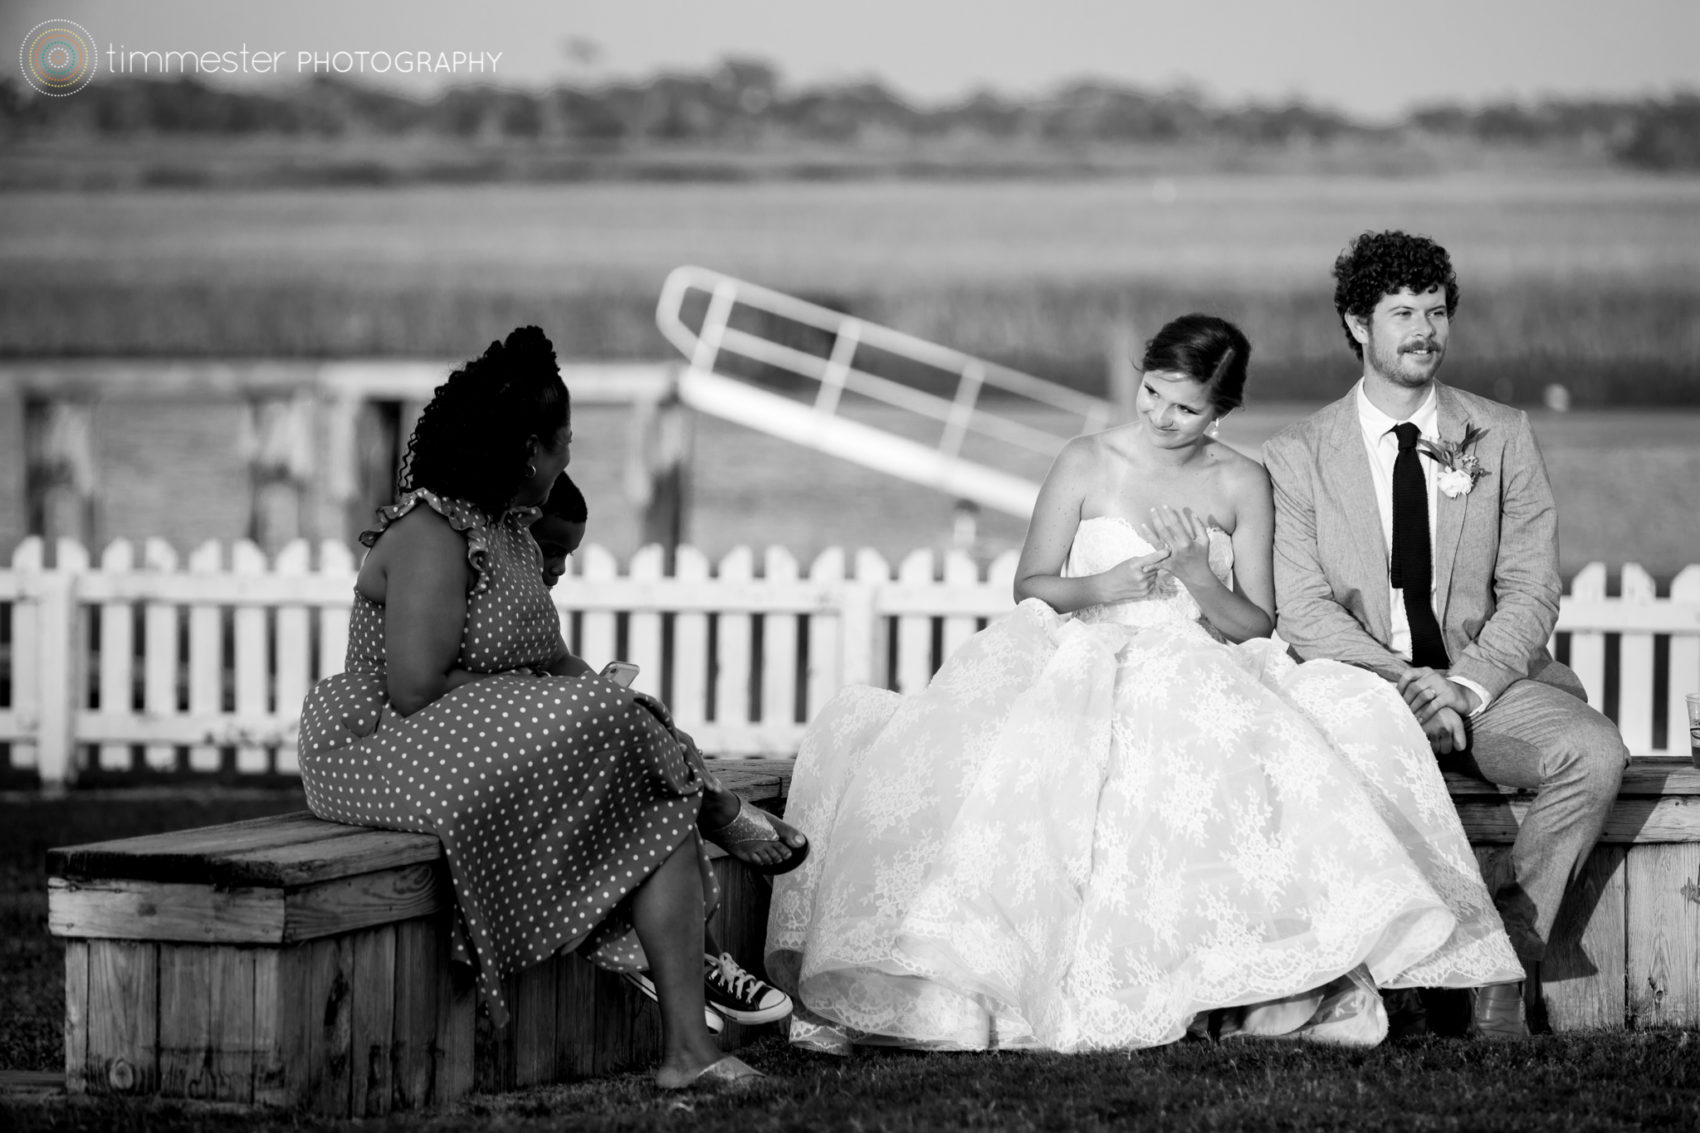 An outdoor wedding and reception at Bald Head Island, NC